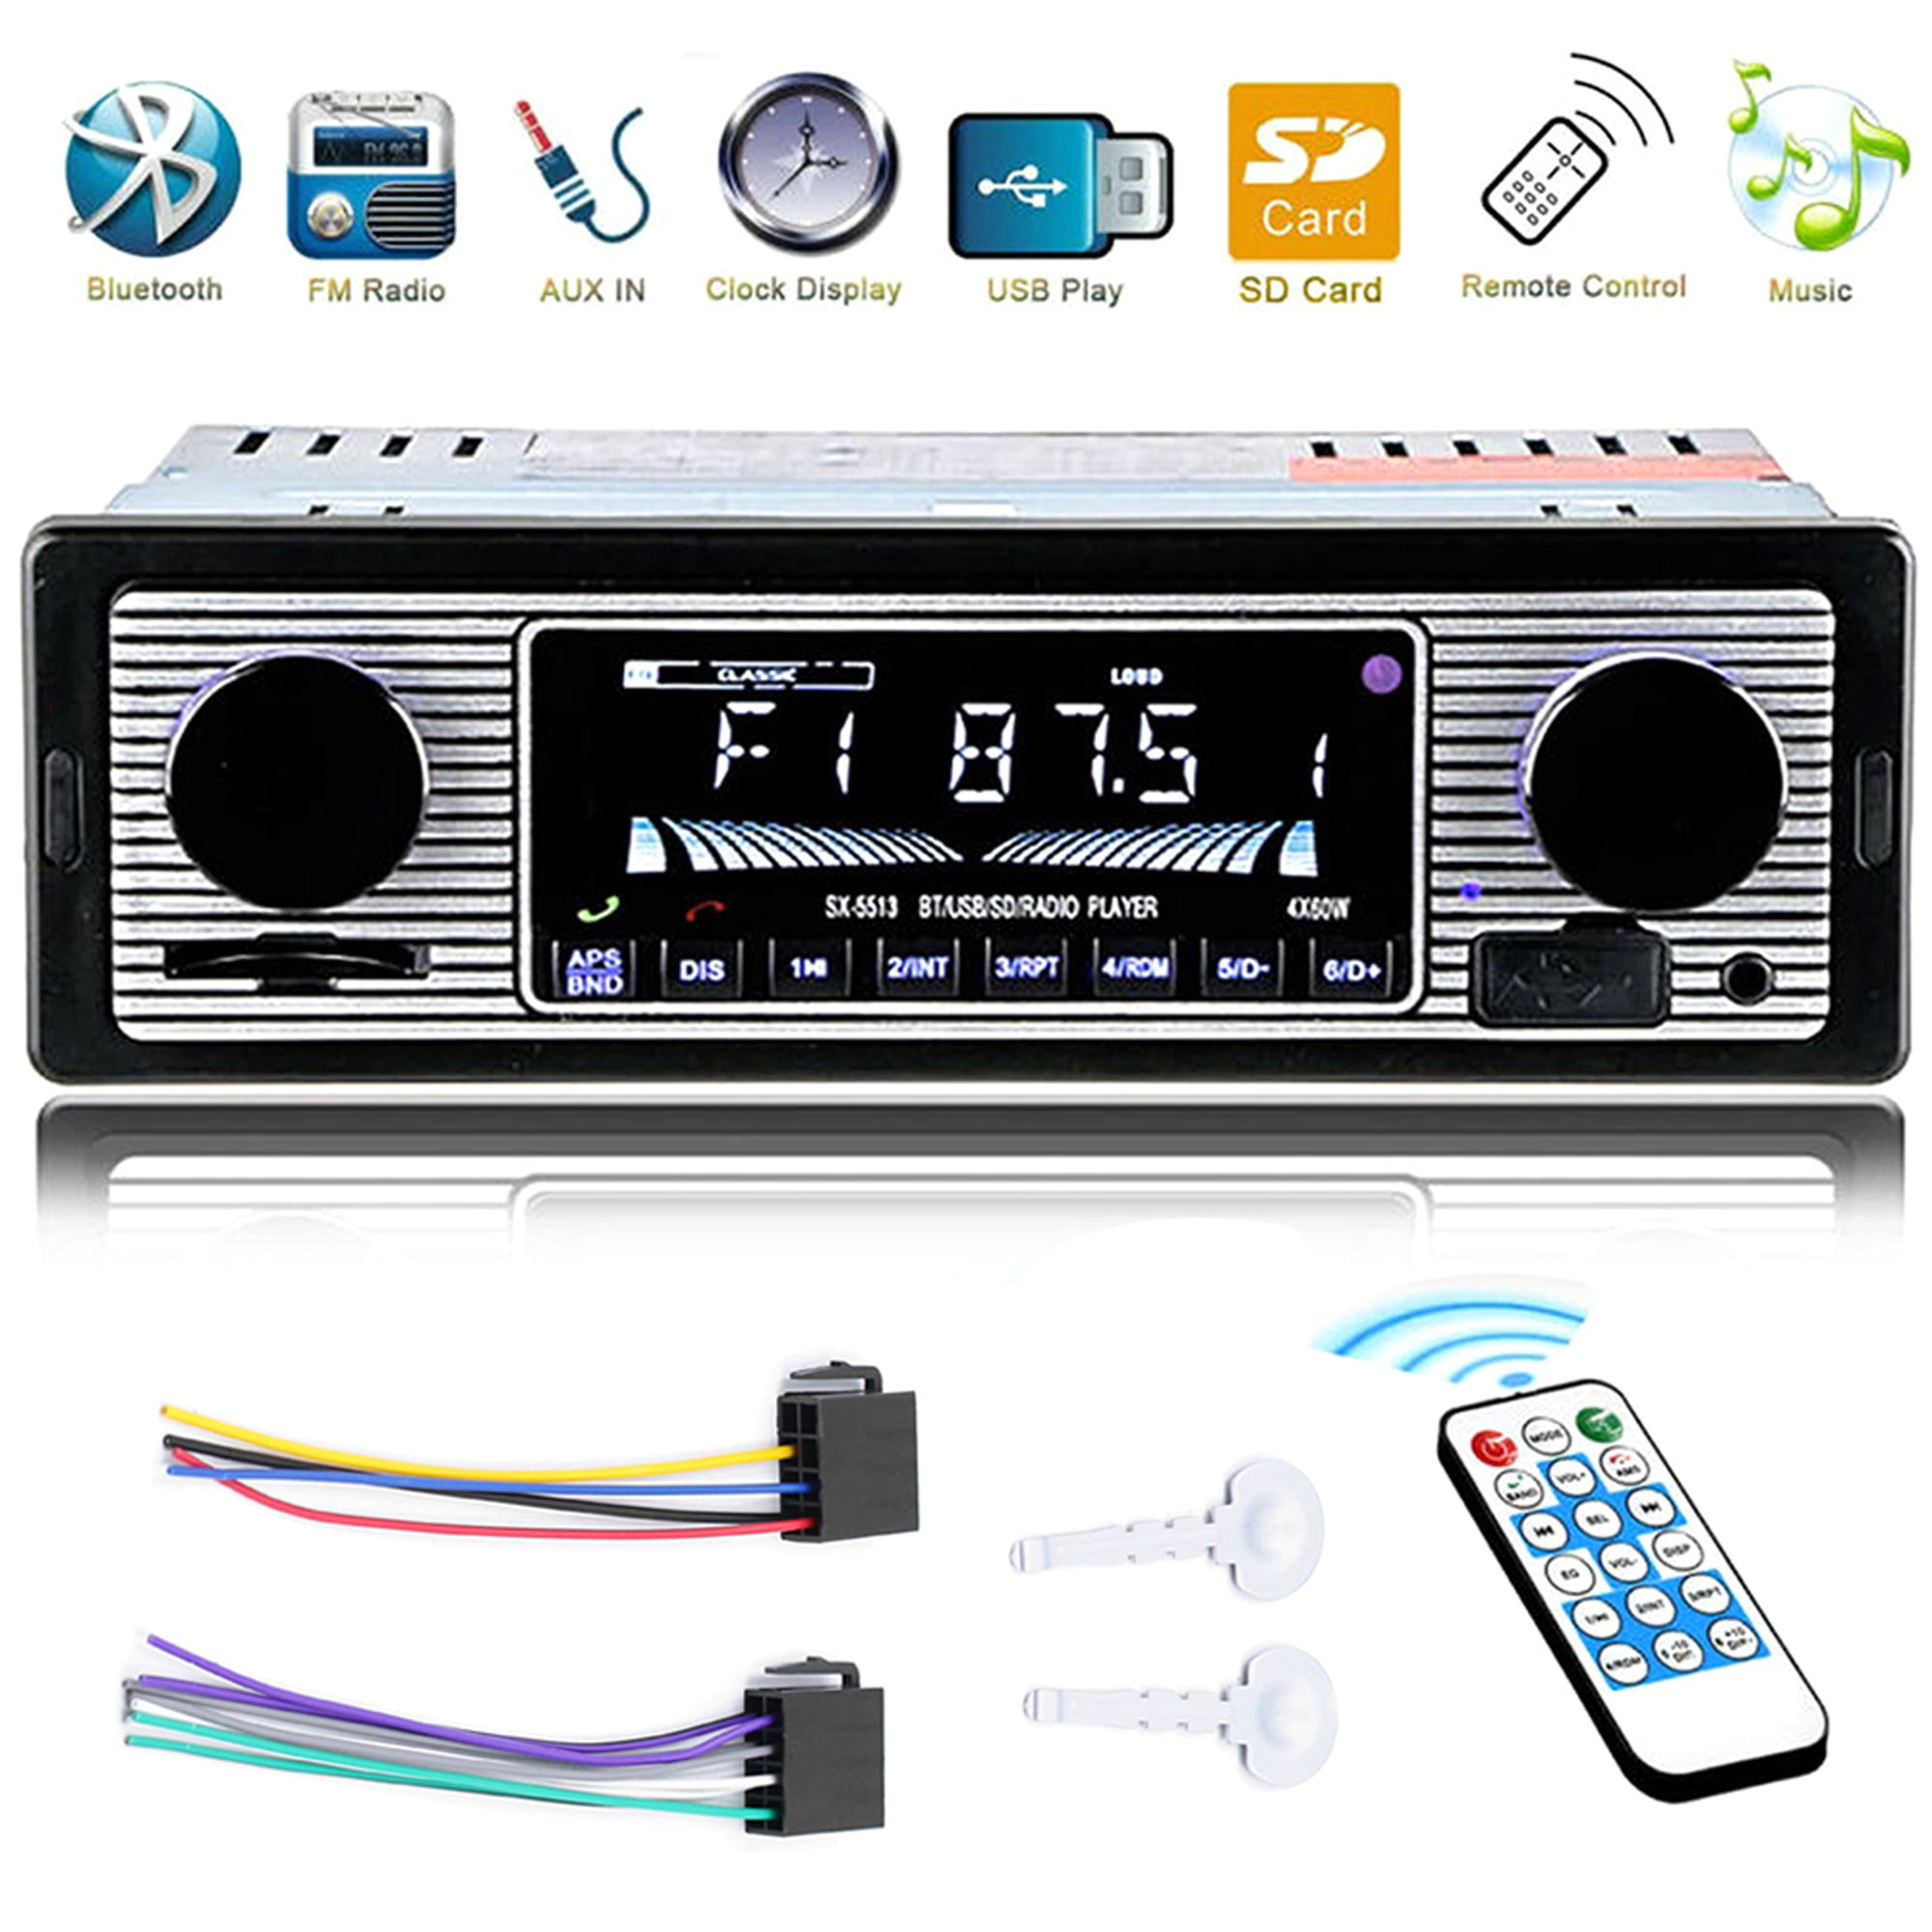 Car Bluetooth In-dash Radio Stereo Audio 1 DIN Unit Player MP3/USB/SD/AUX-IN/FM 